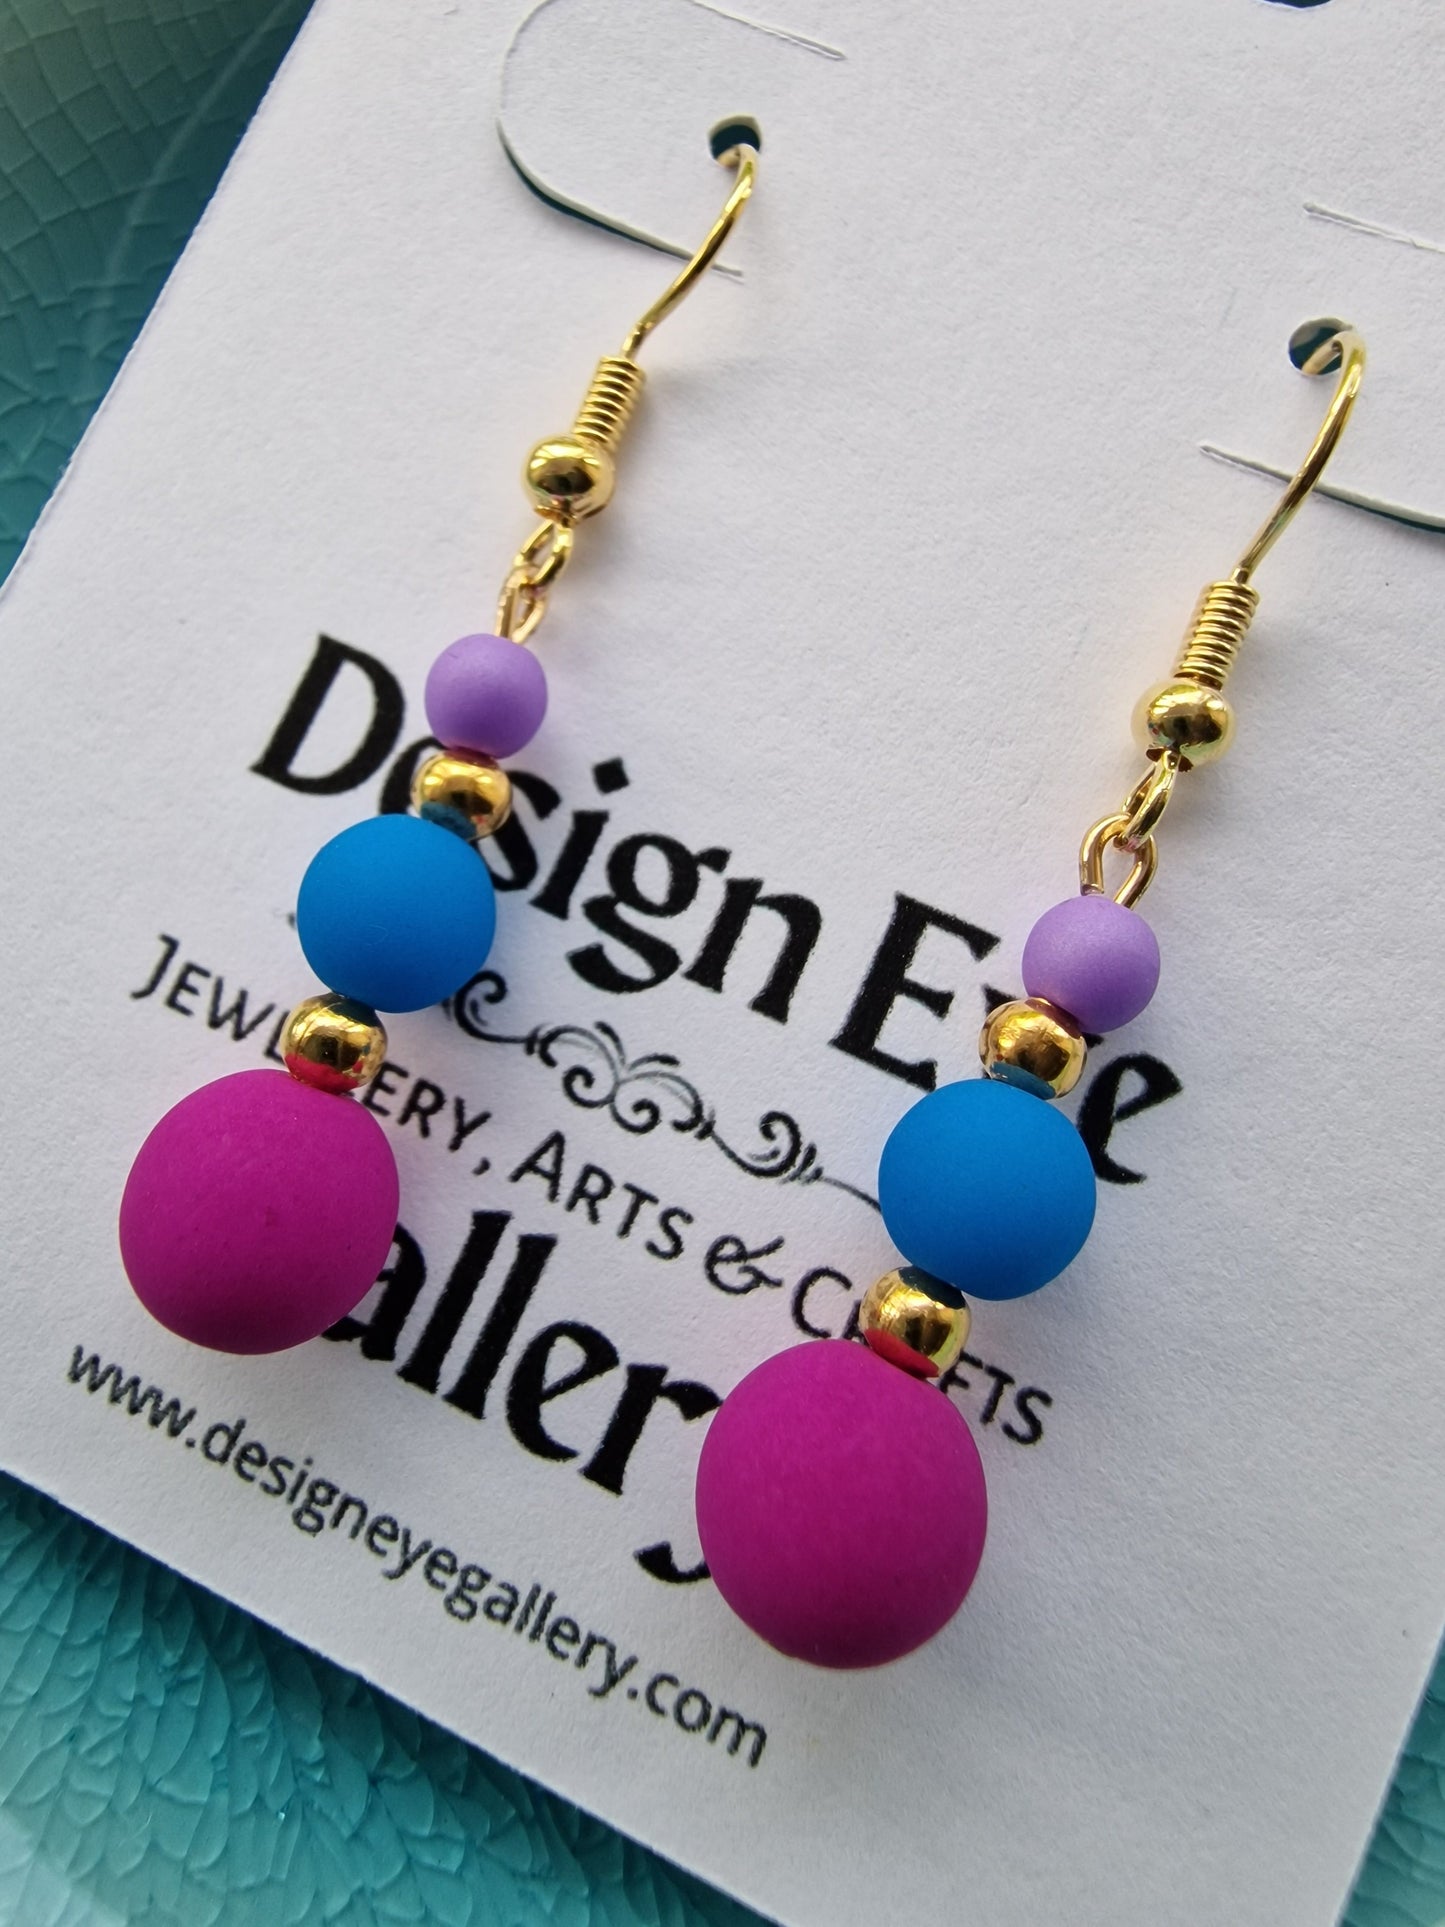 Czech glass bead drop earrings in vibrant purples and blue